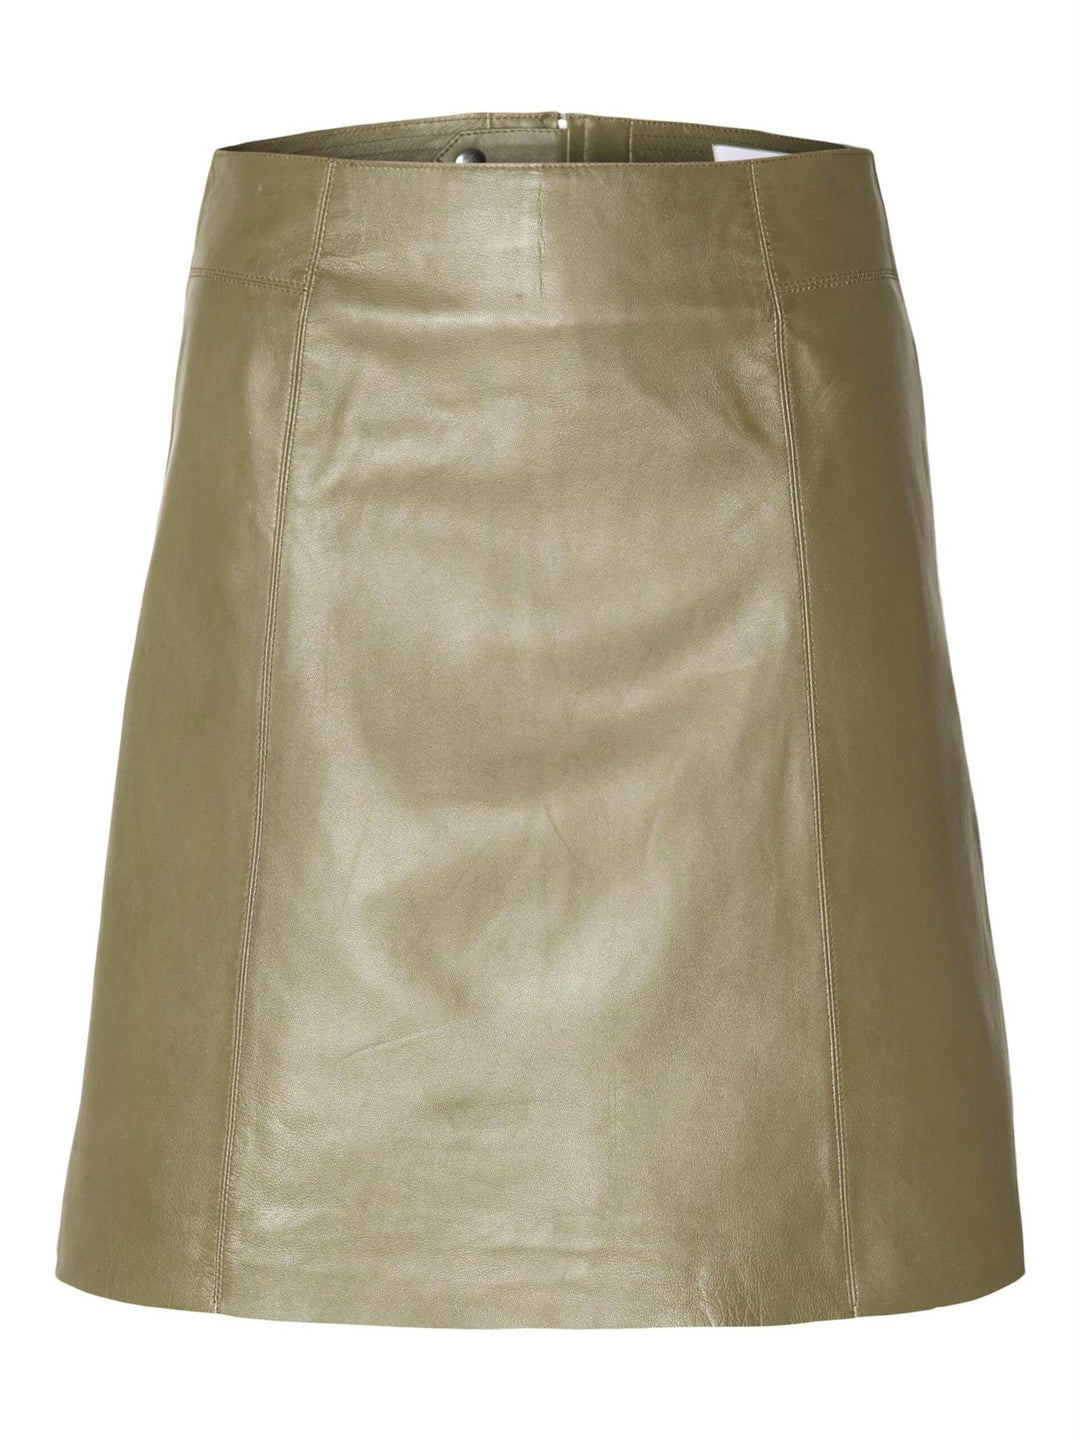 New Ibi Leather Skirt